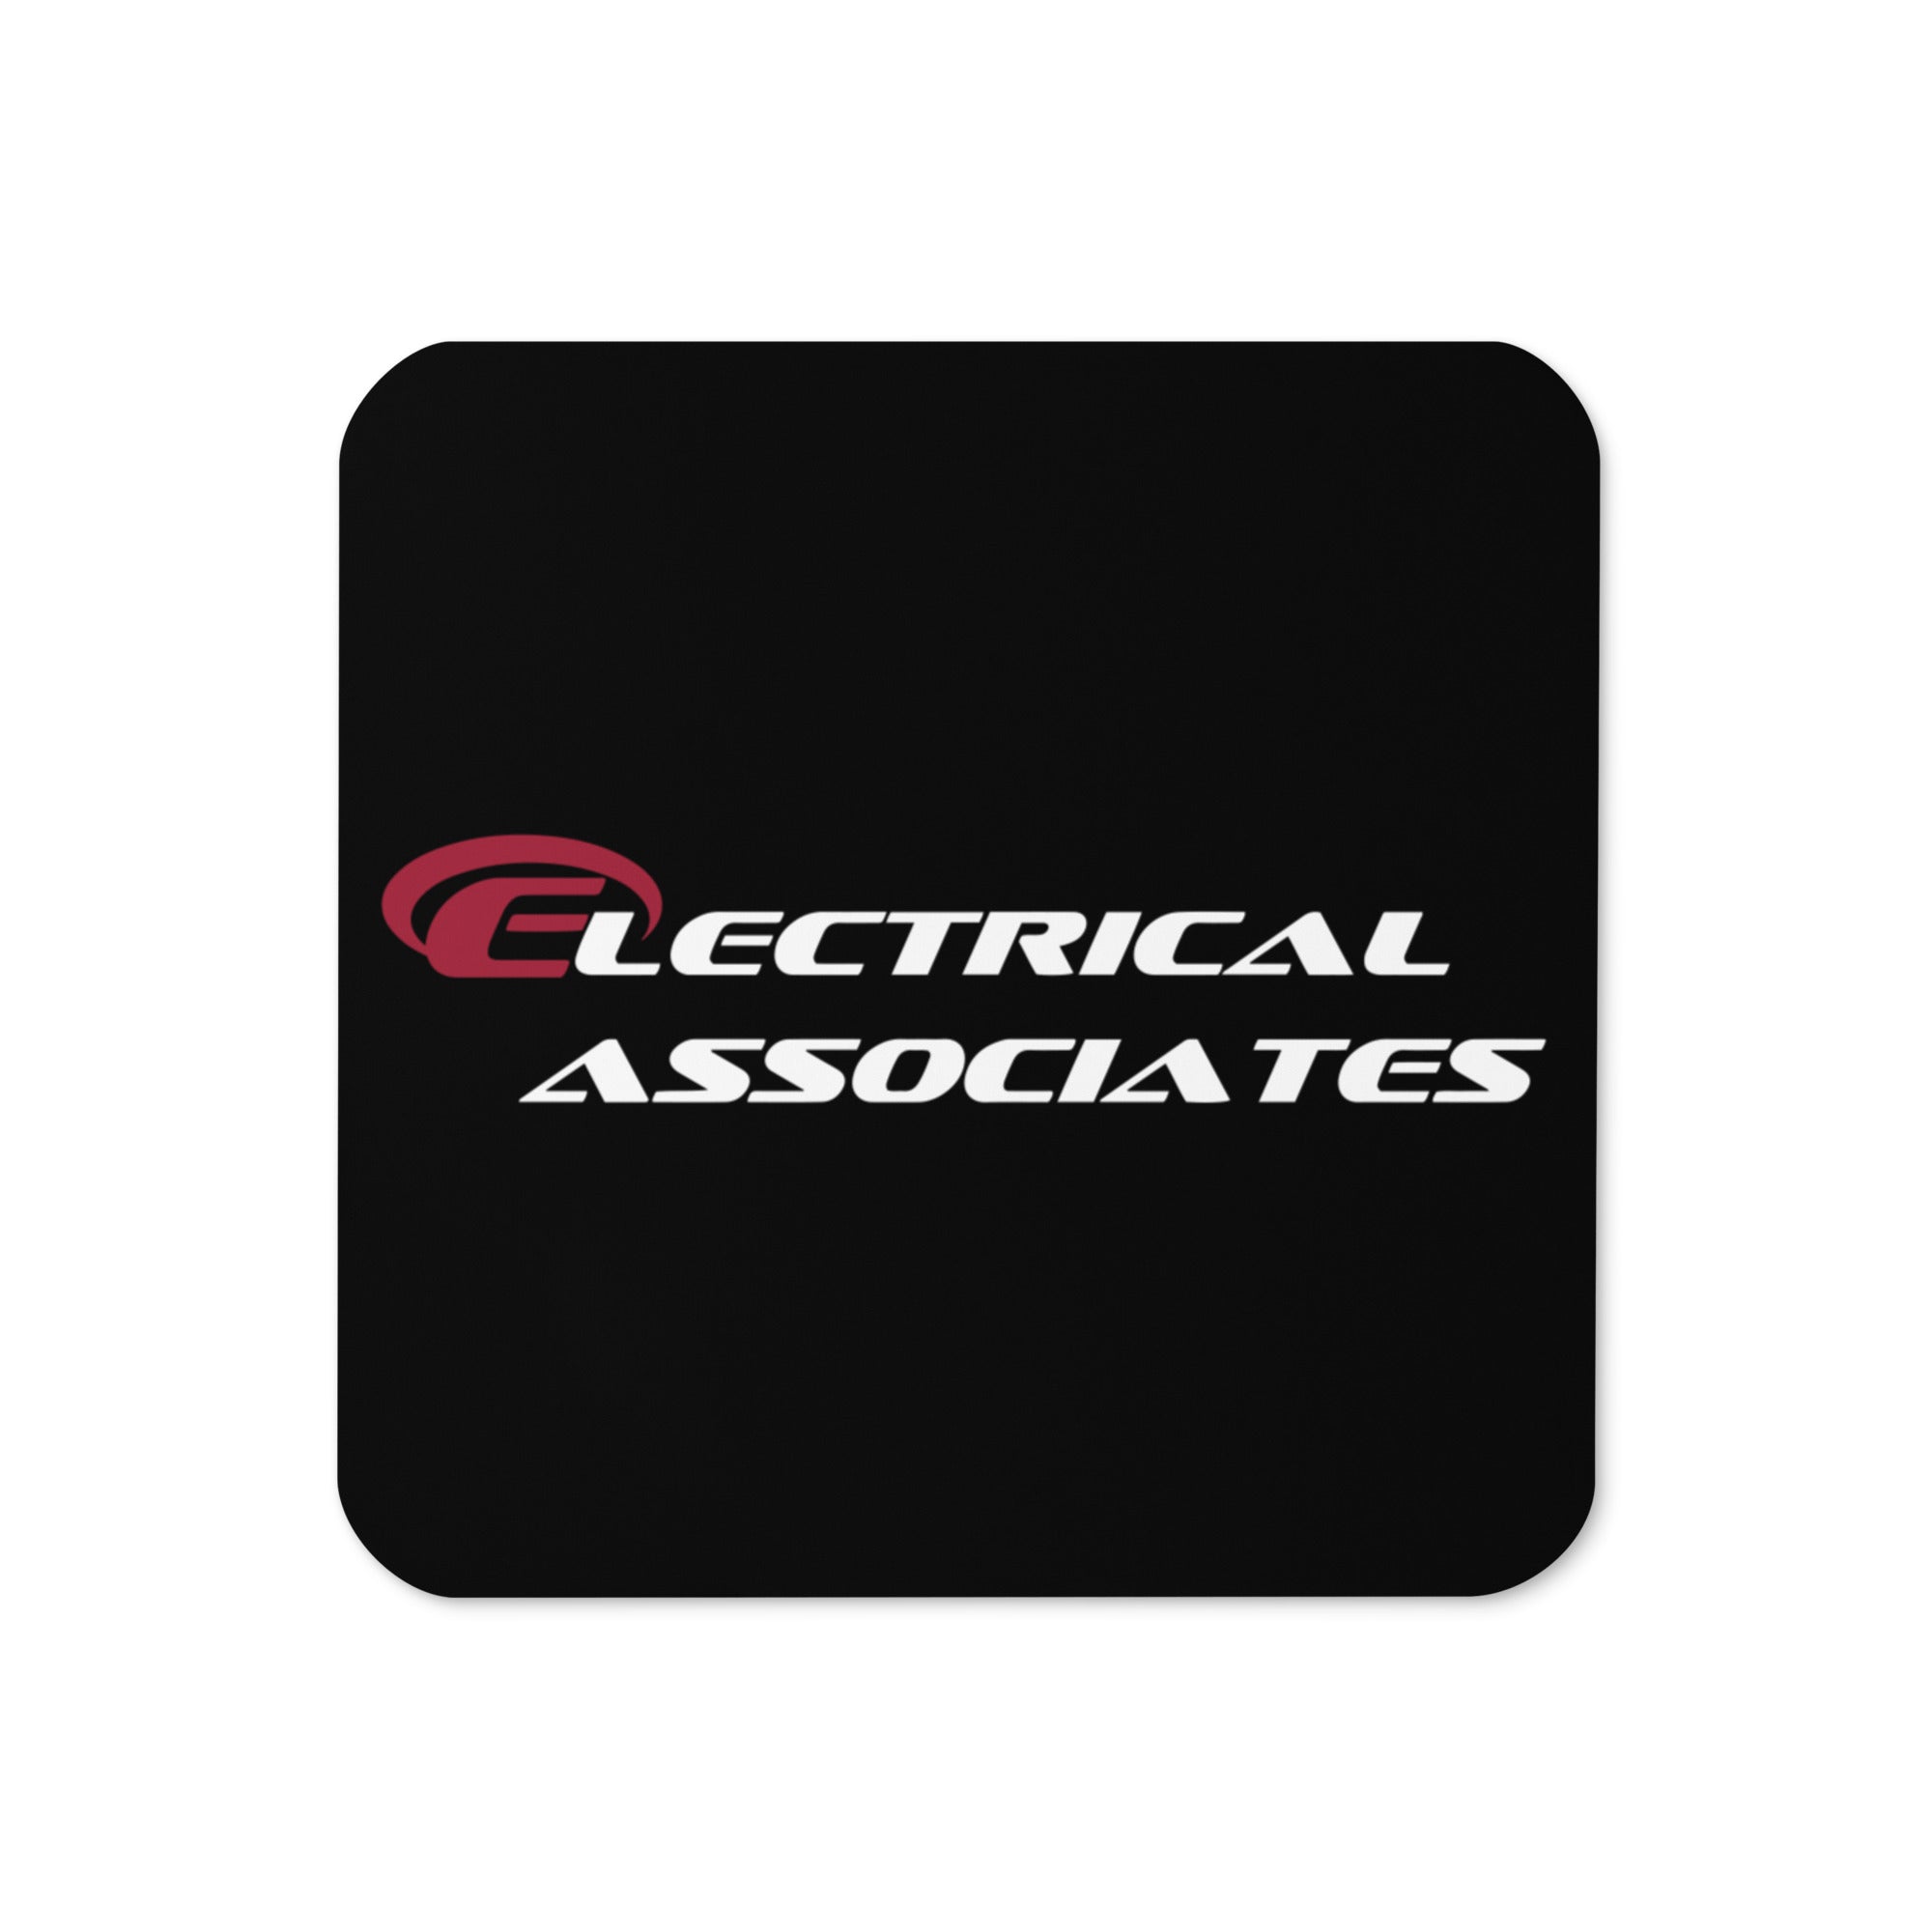 Electrical Associates Cork Back Coaster